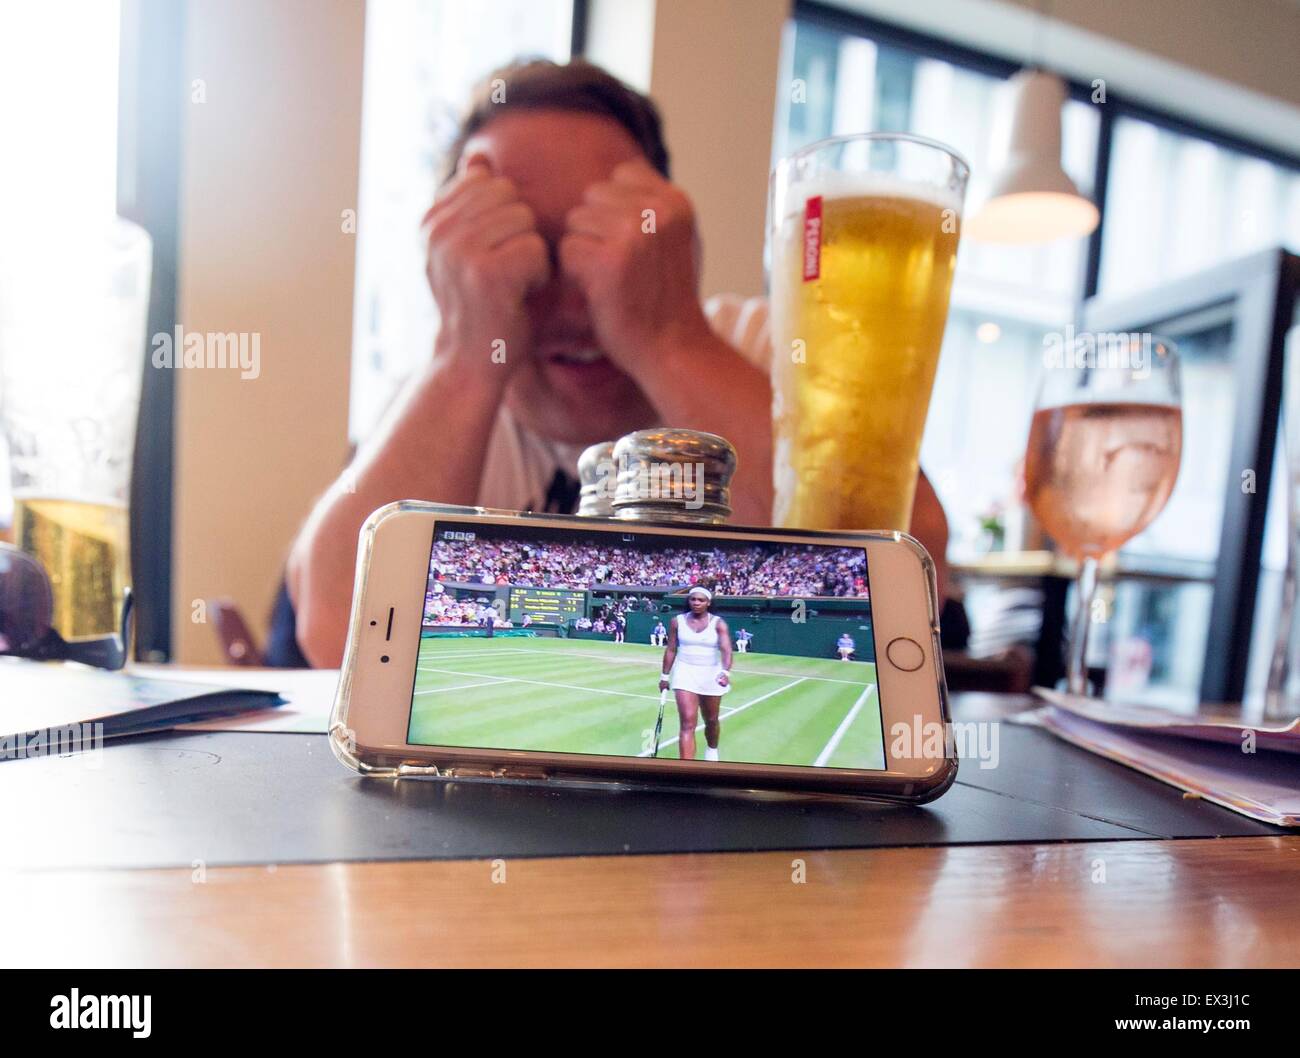 Watching Wimbledon iphone BBC iplayer in the pub Stock Photo